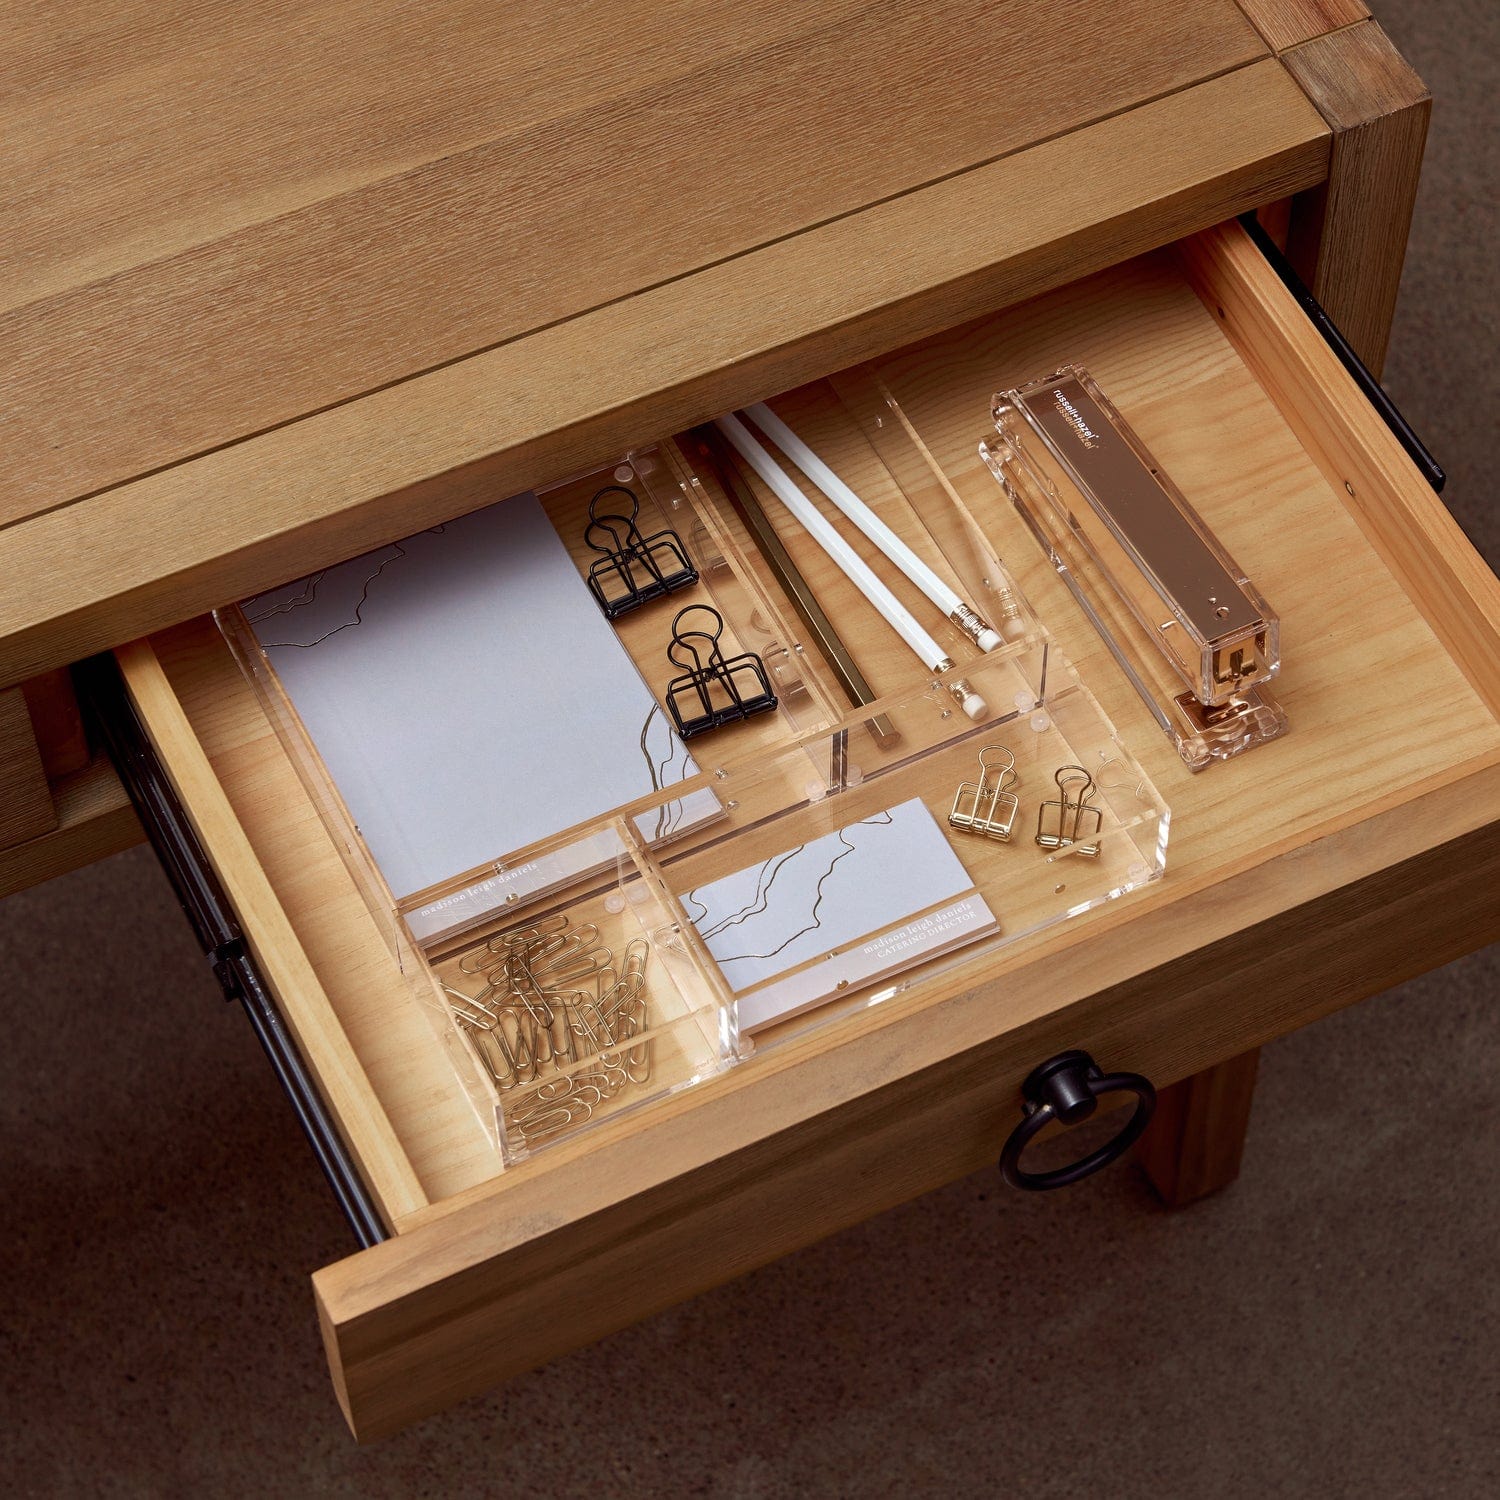 Acrylic Desk Organizer, Desk Drawer Organizer And Accessories With